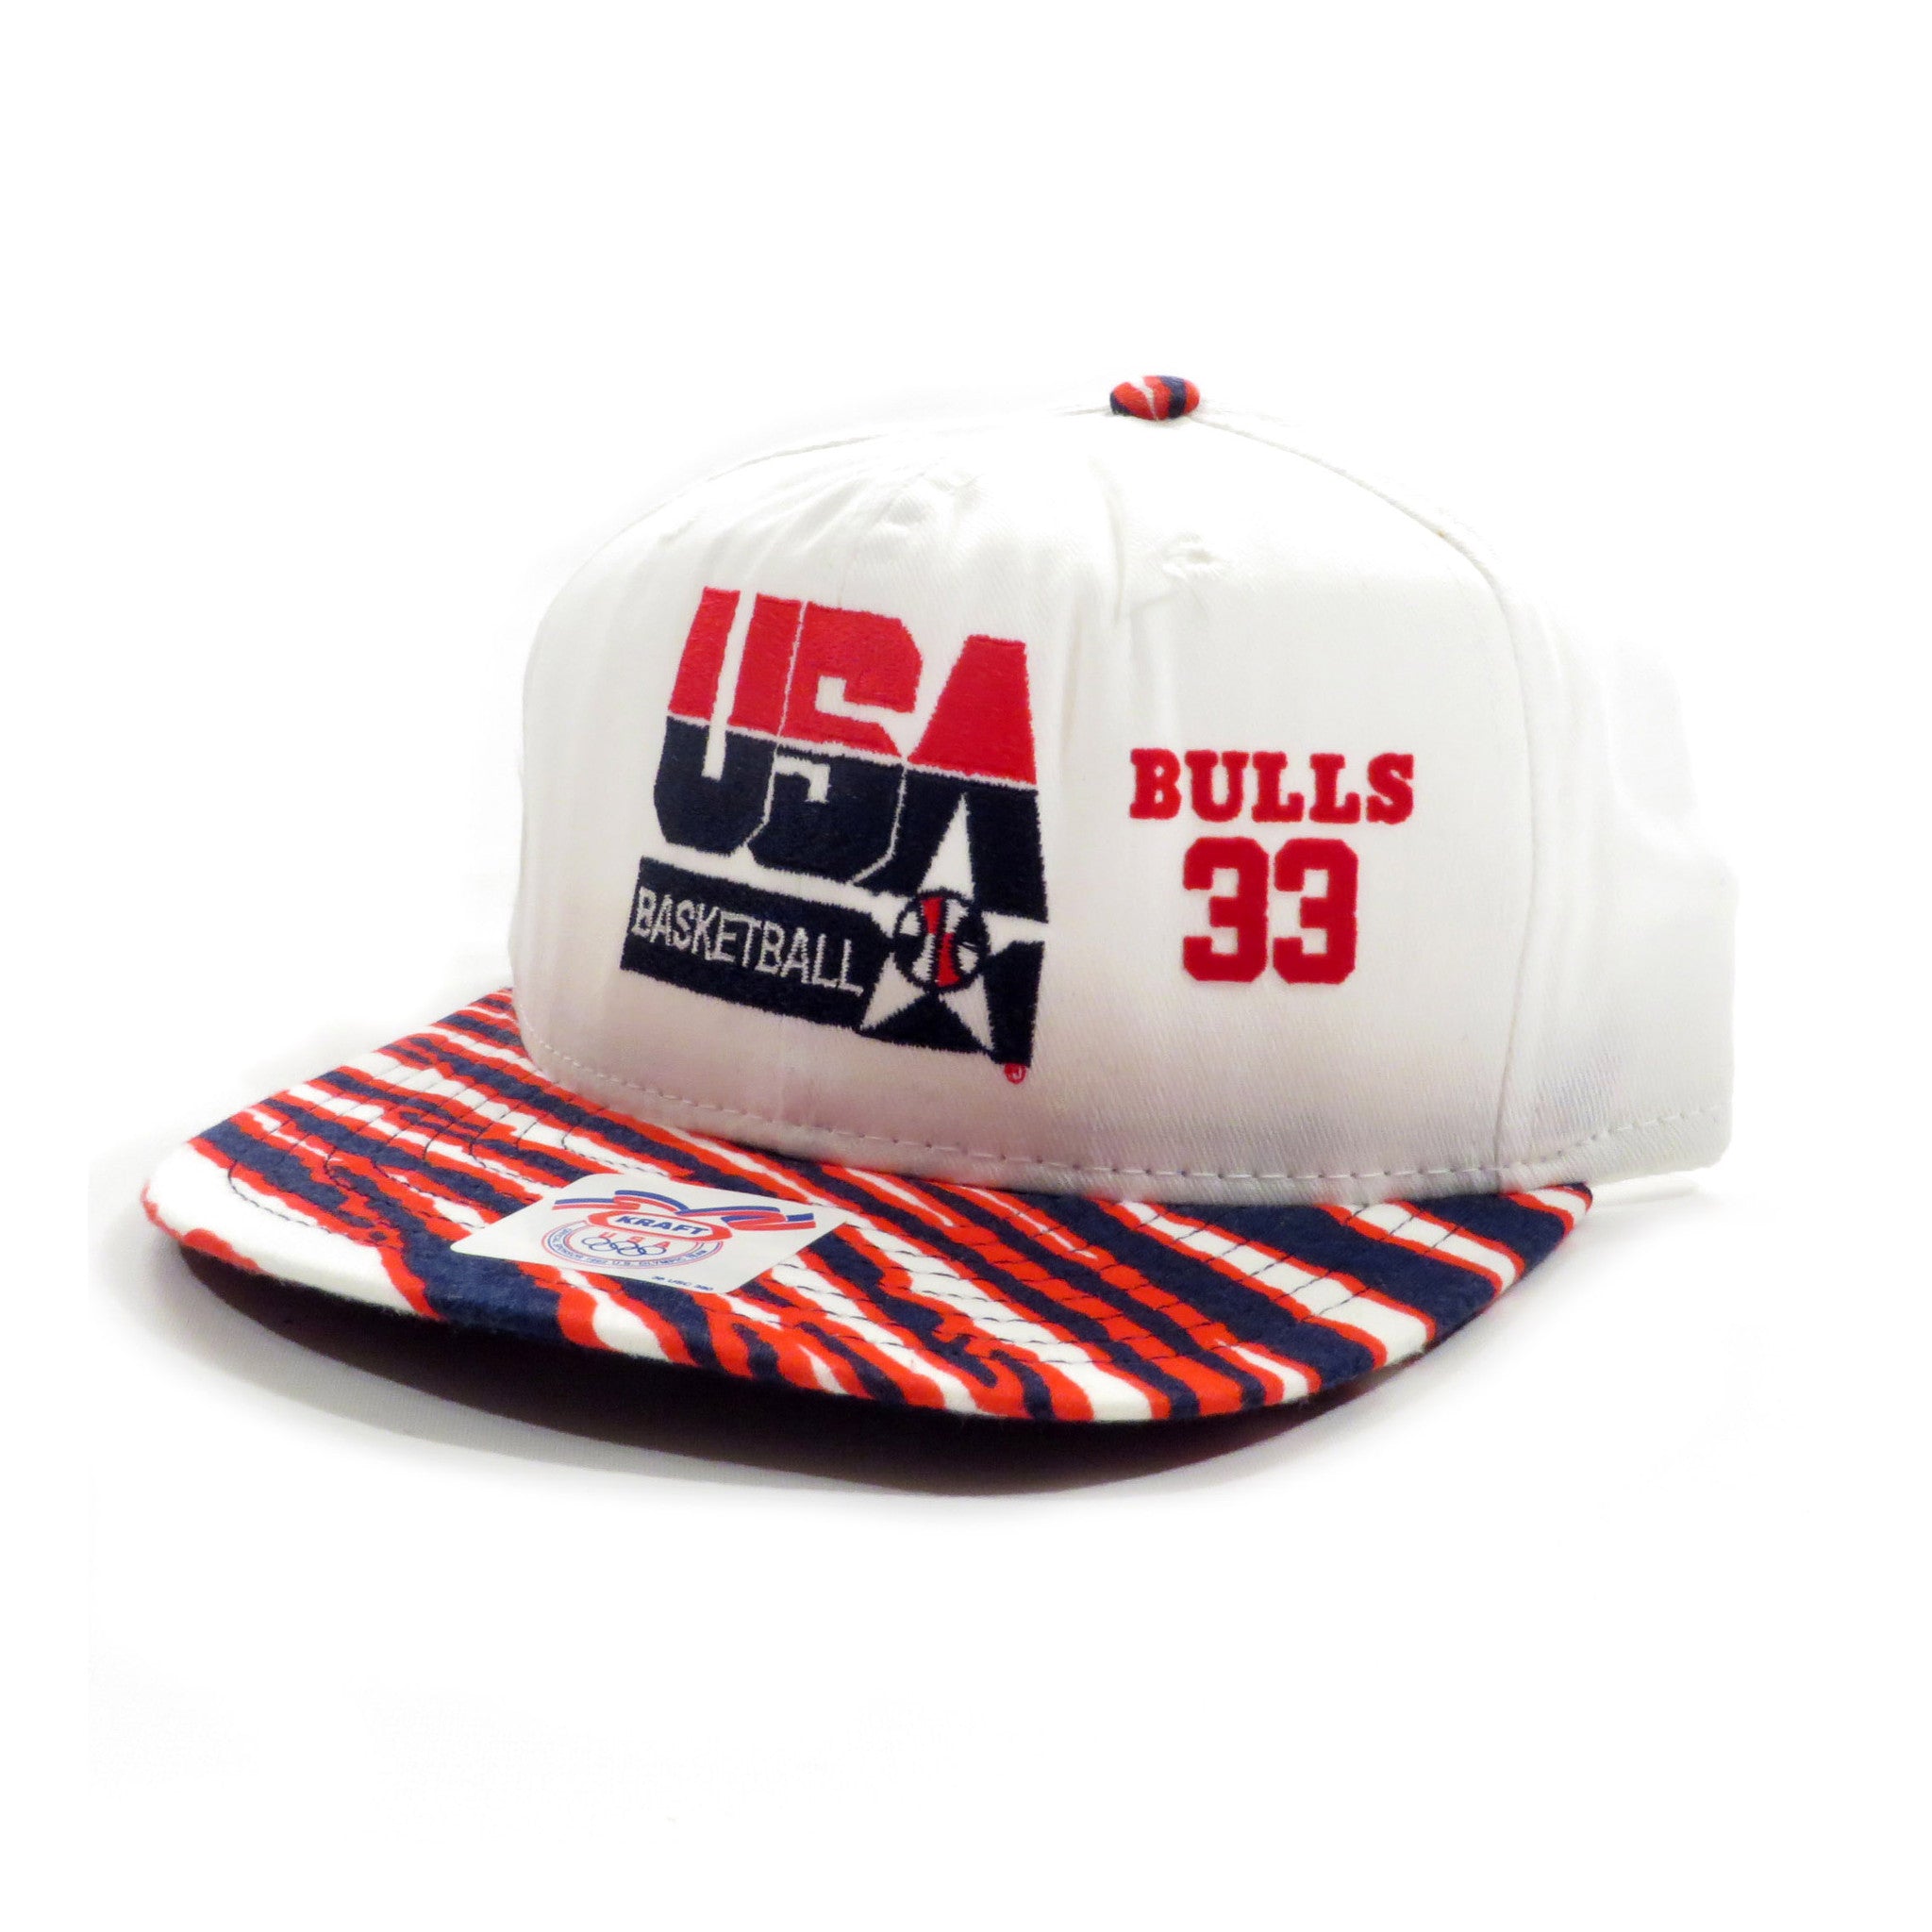 USA Basketball Pippen 33 Bulls Zubaz Snapback Hat